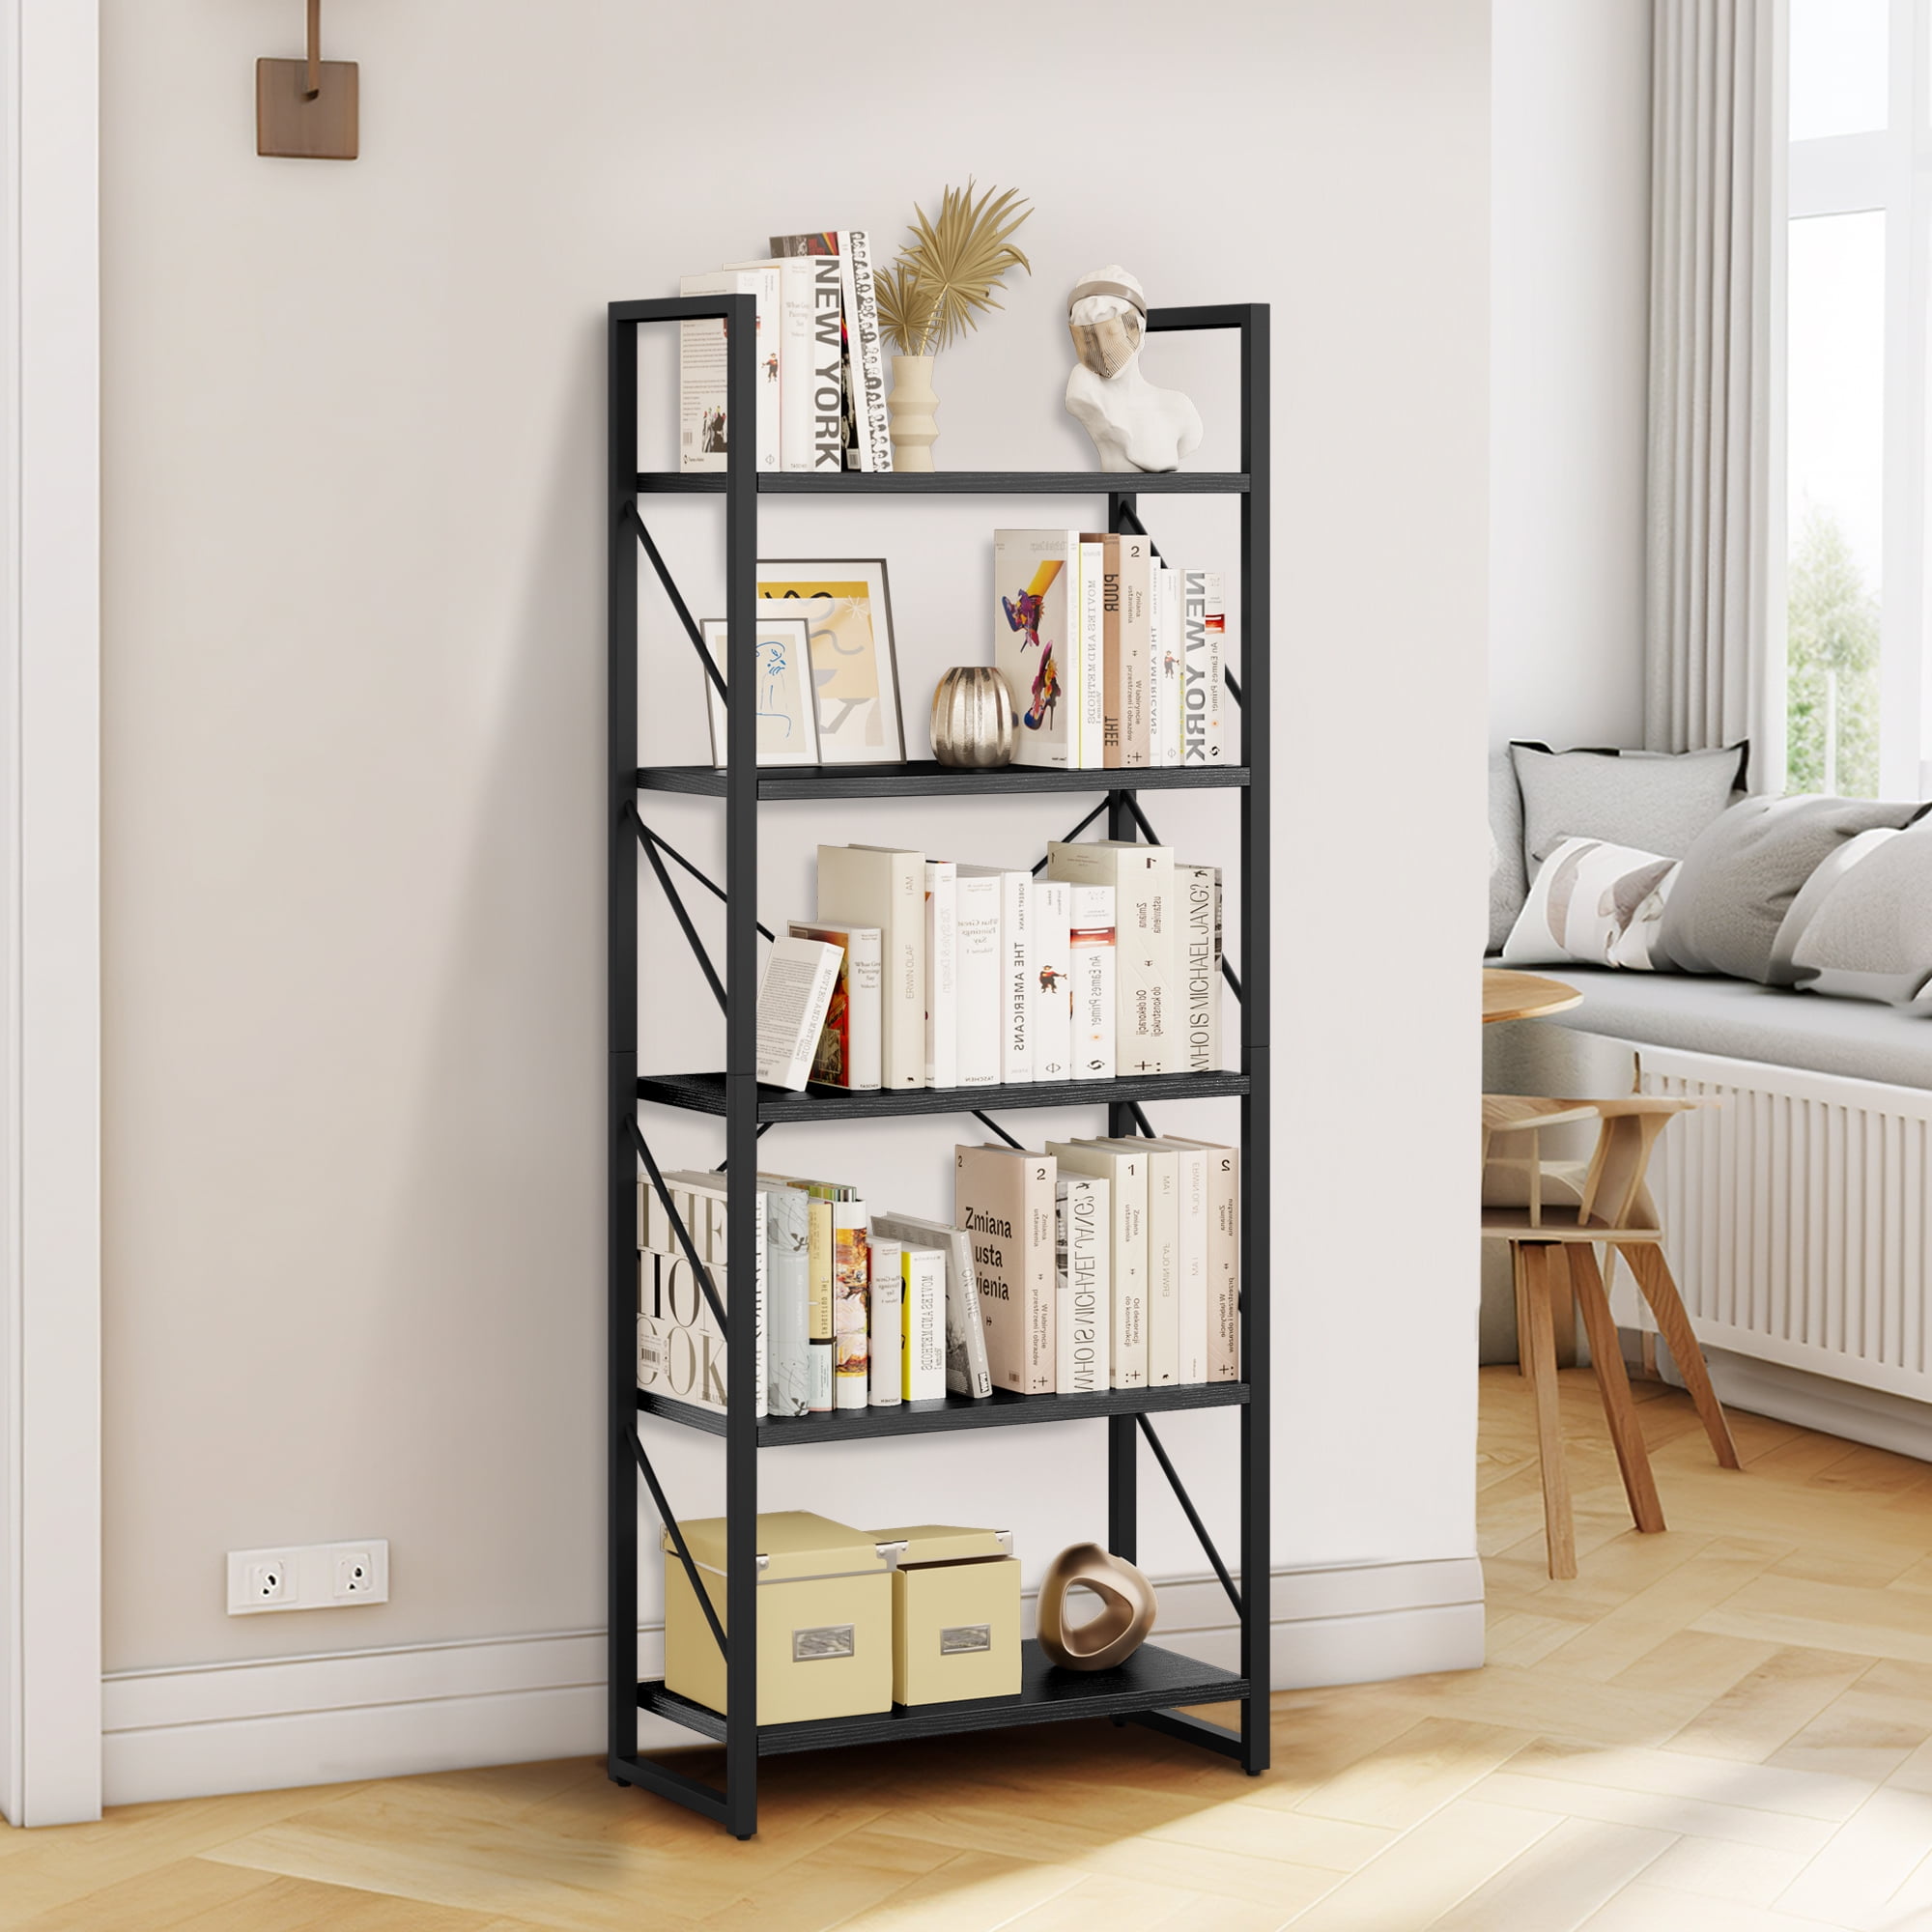 YITAHOME 5-Tier Bookshelf Storage Rack Display Shelves Organizer Industrial Wood, Brown